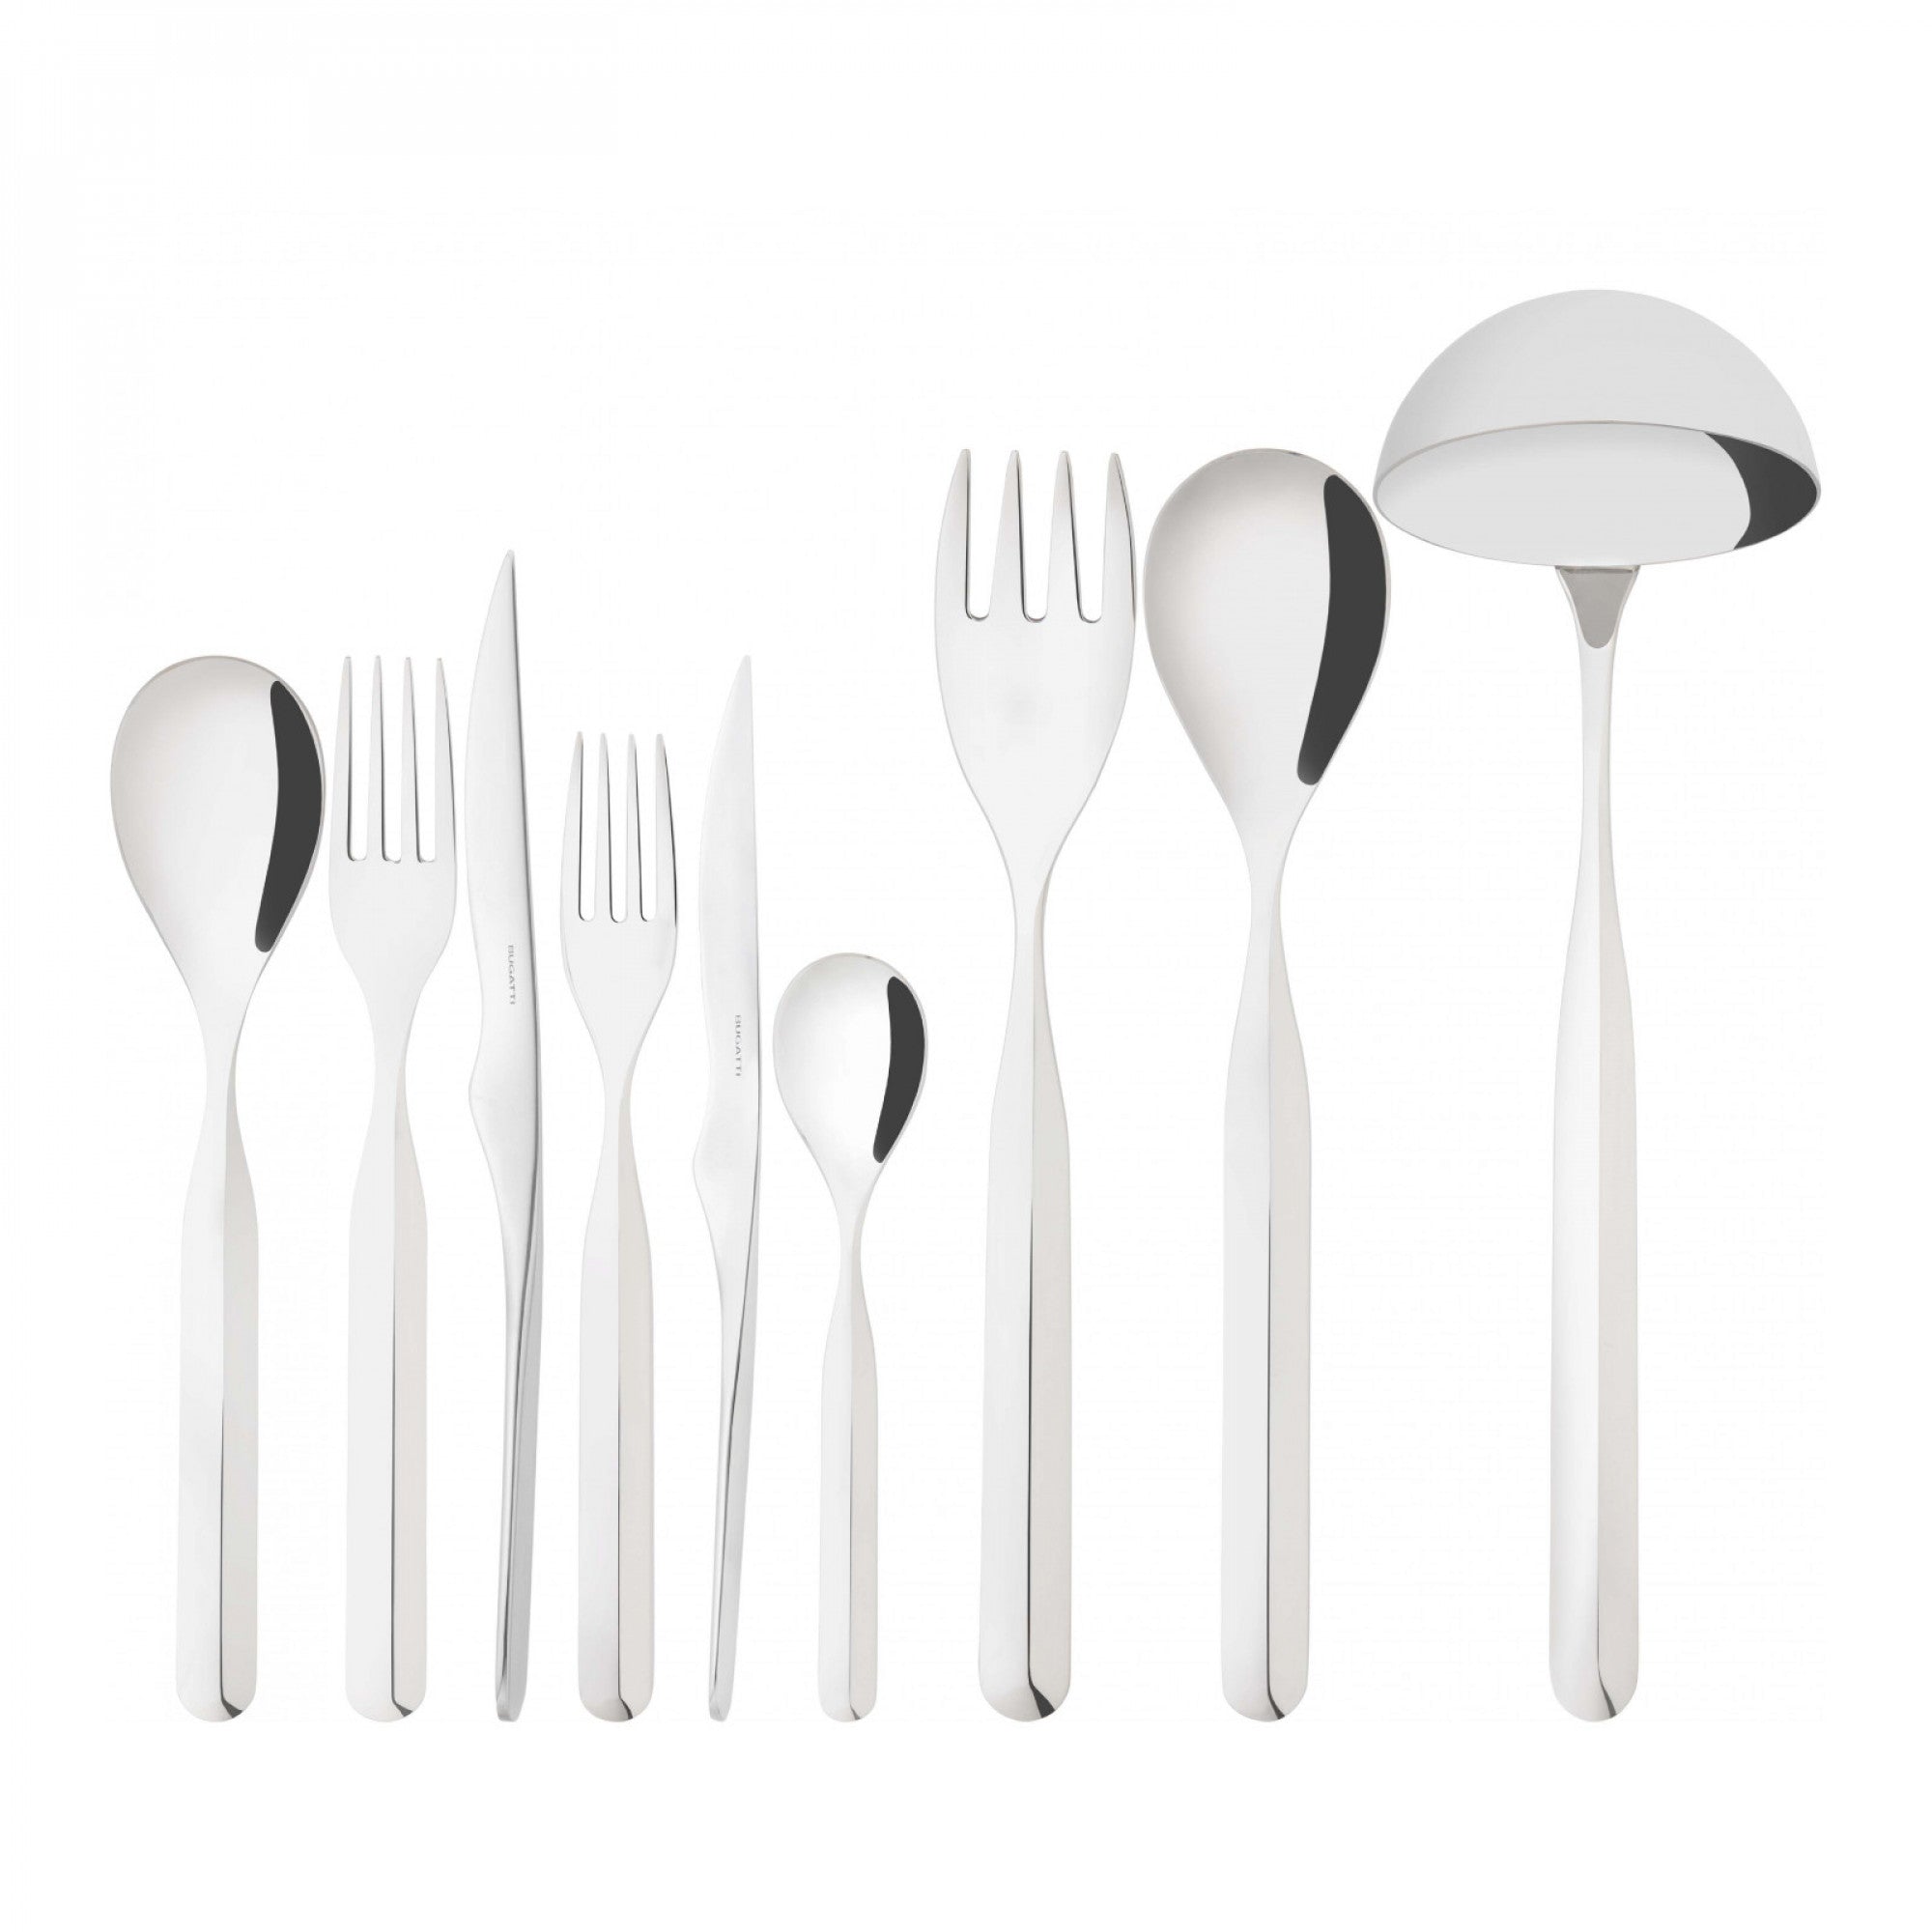 BUGATTI, Vidal, 75-piece cutlery set in 18/10 stainless steel